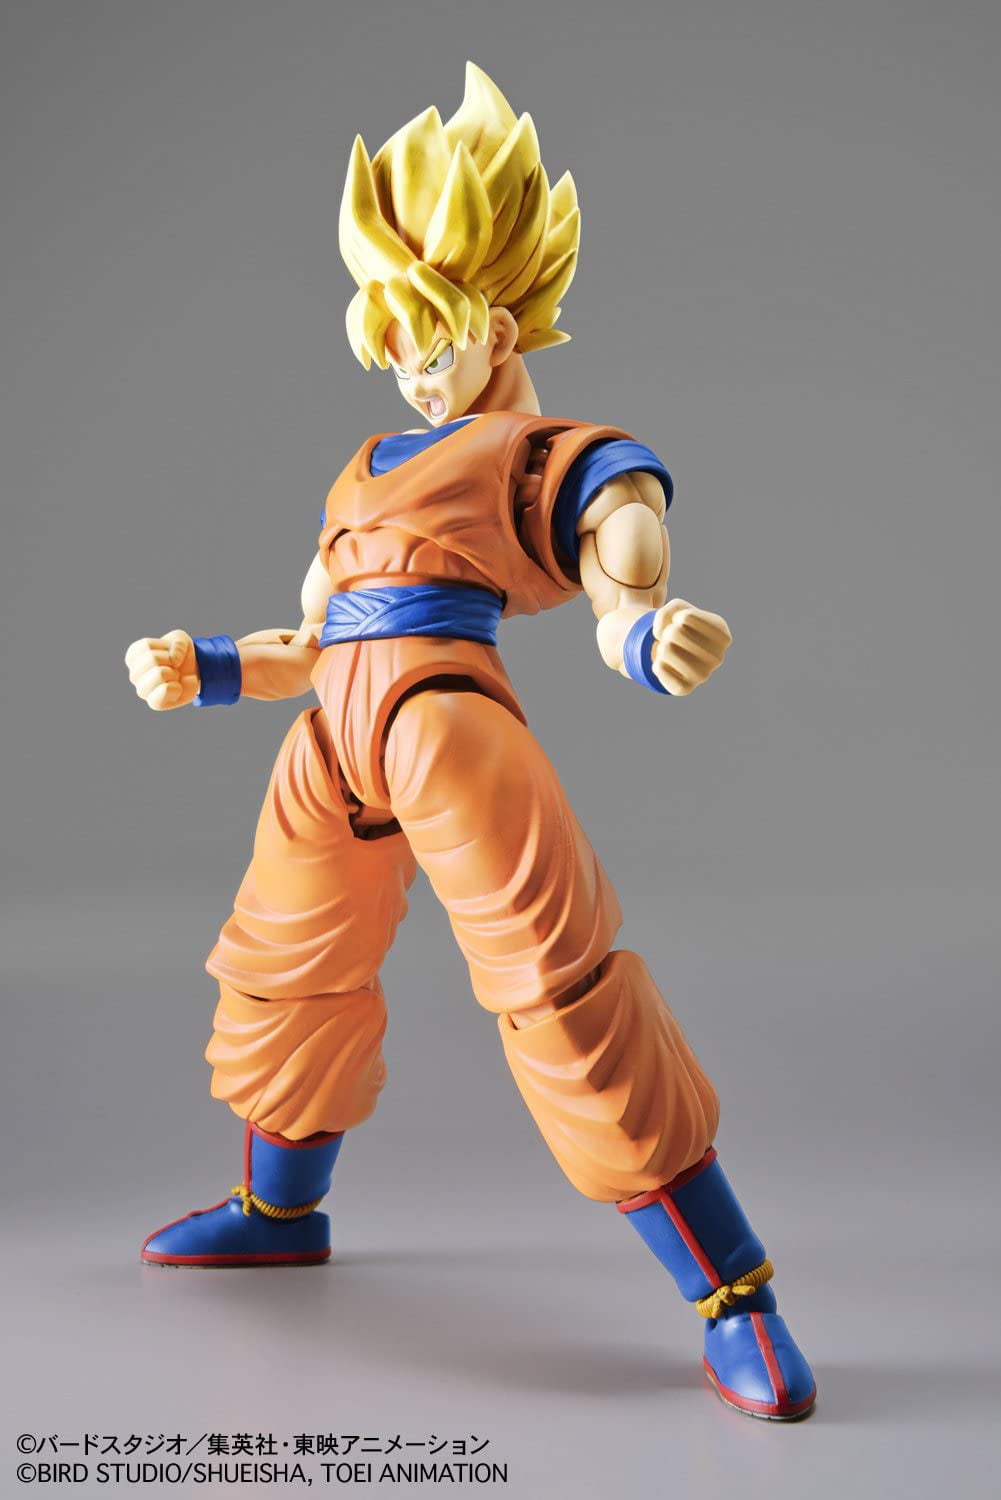  Bandai Hobby Figure-Rise Standard Son Goku Dragon Ball Z Model  Kit Figure, Multi (BAN219762) : Toys & Games